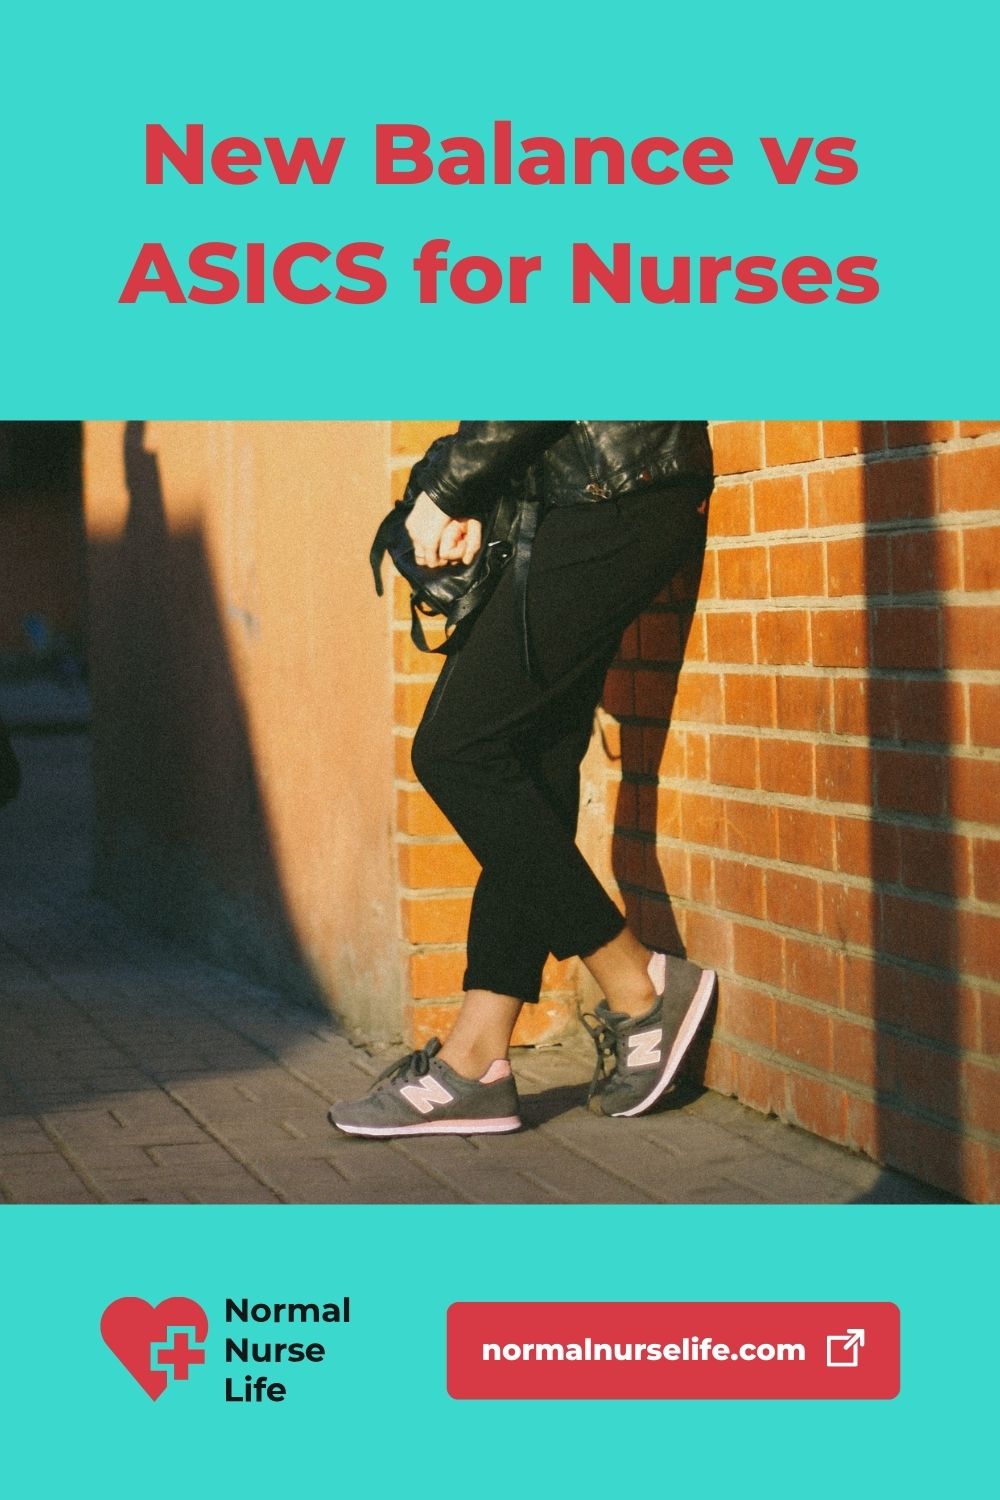 ASICS vs New Balance for nurses